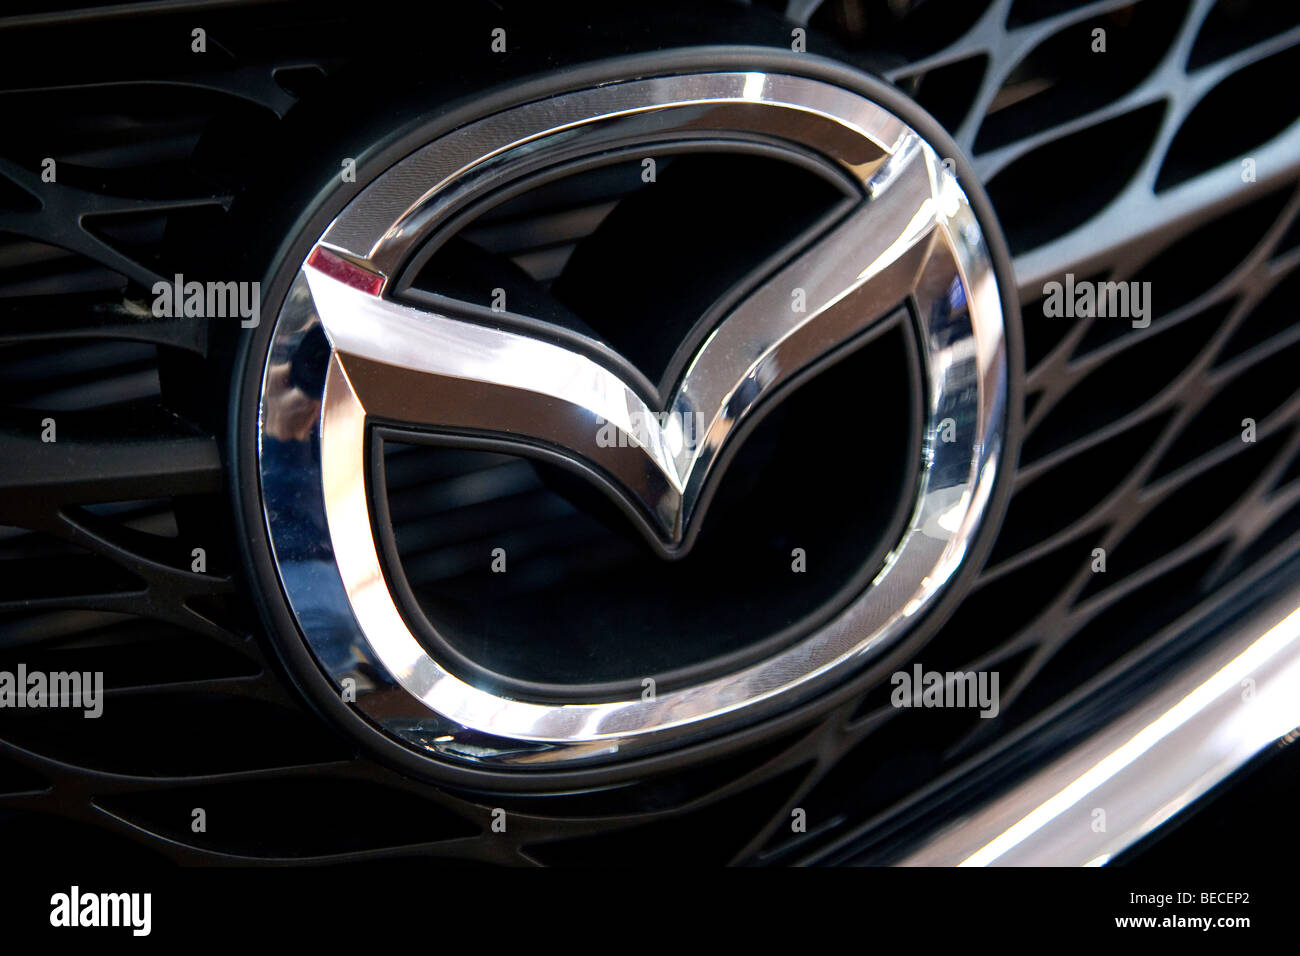 Emblema di Mazda su una vettura Foto Stock